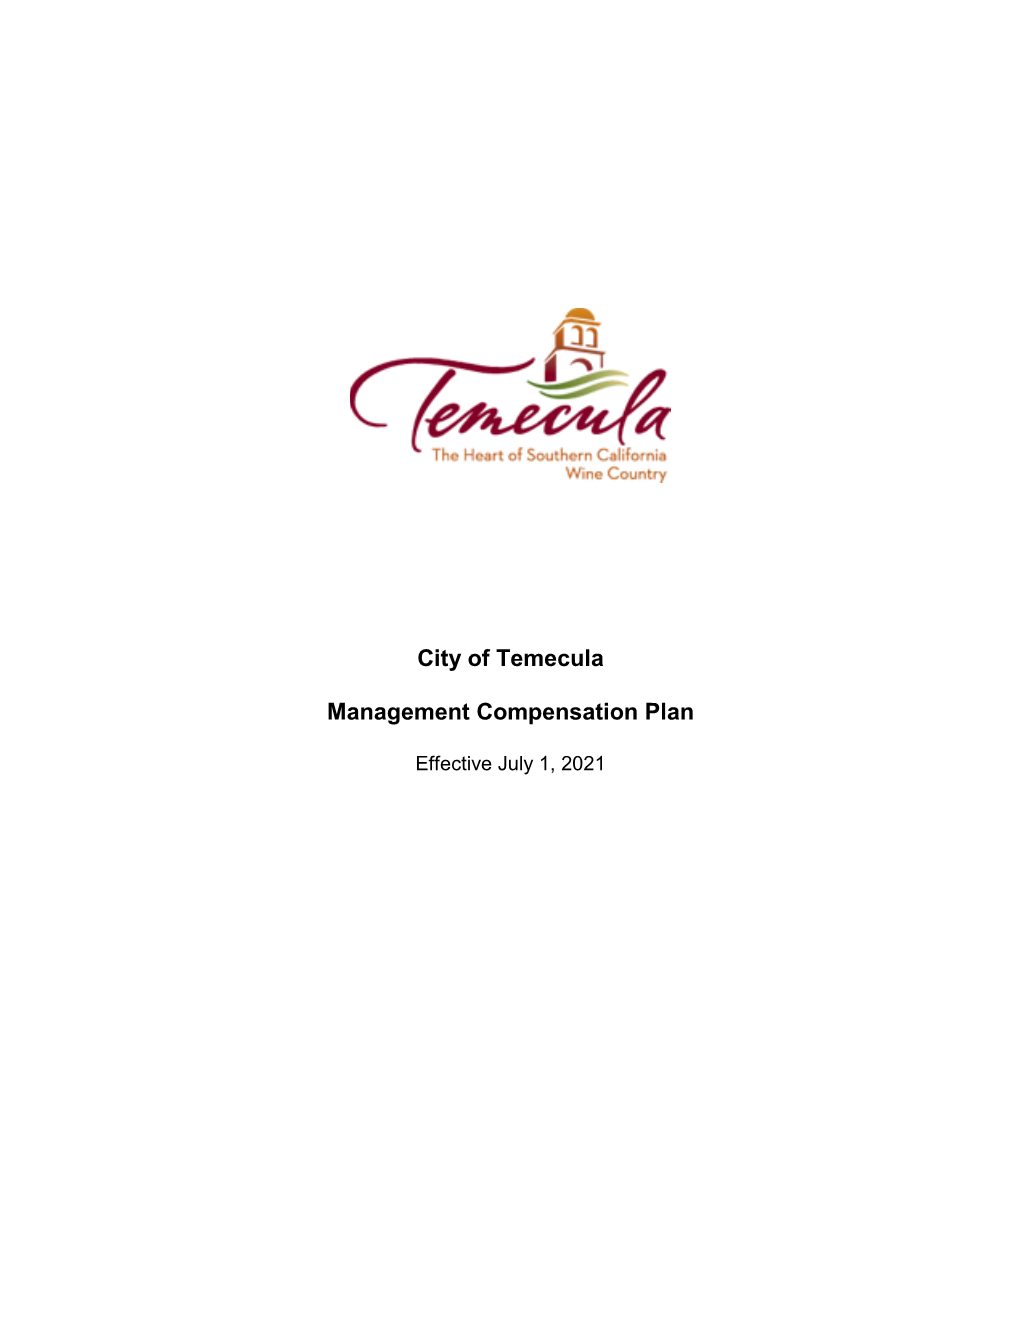 City of Temecula Management Compensation Plan